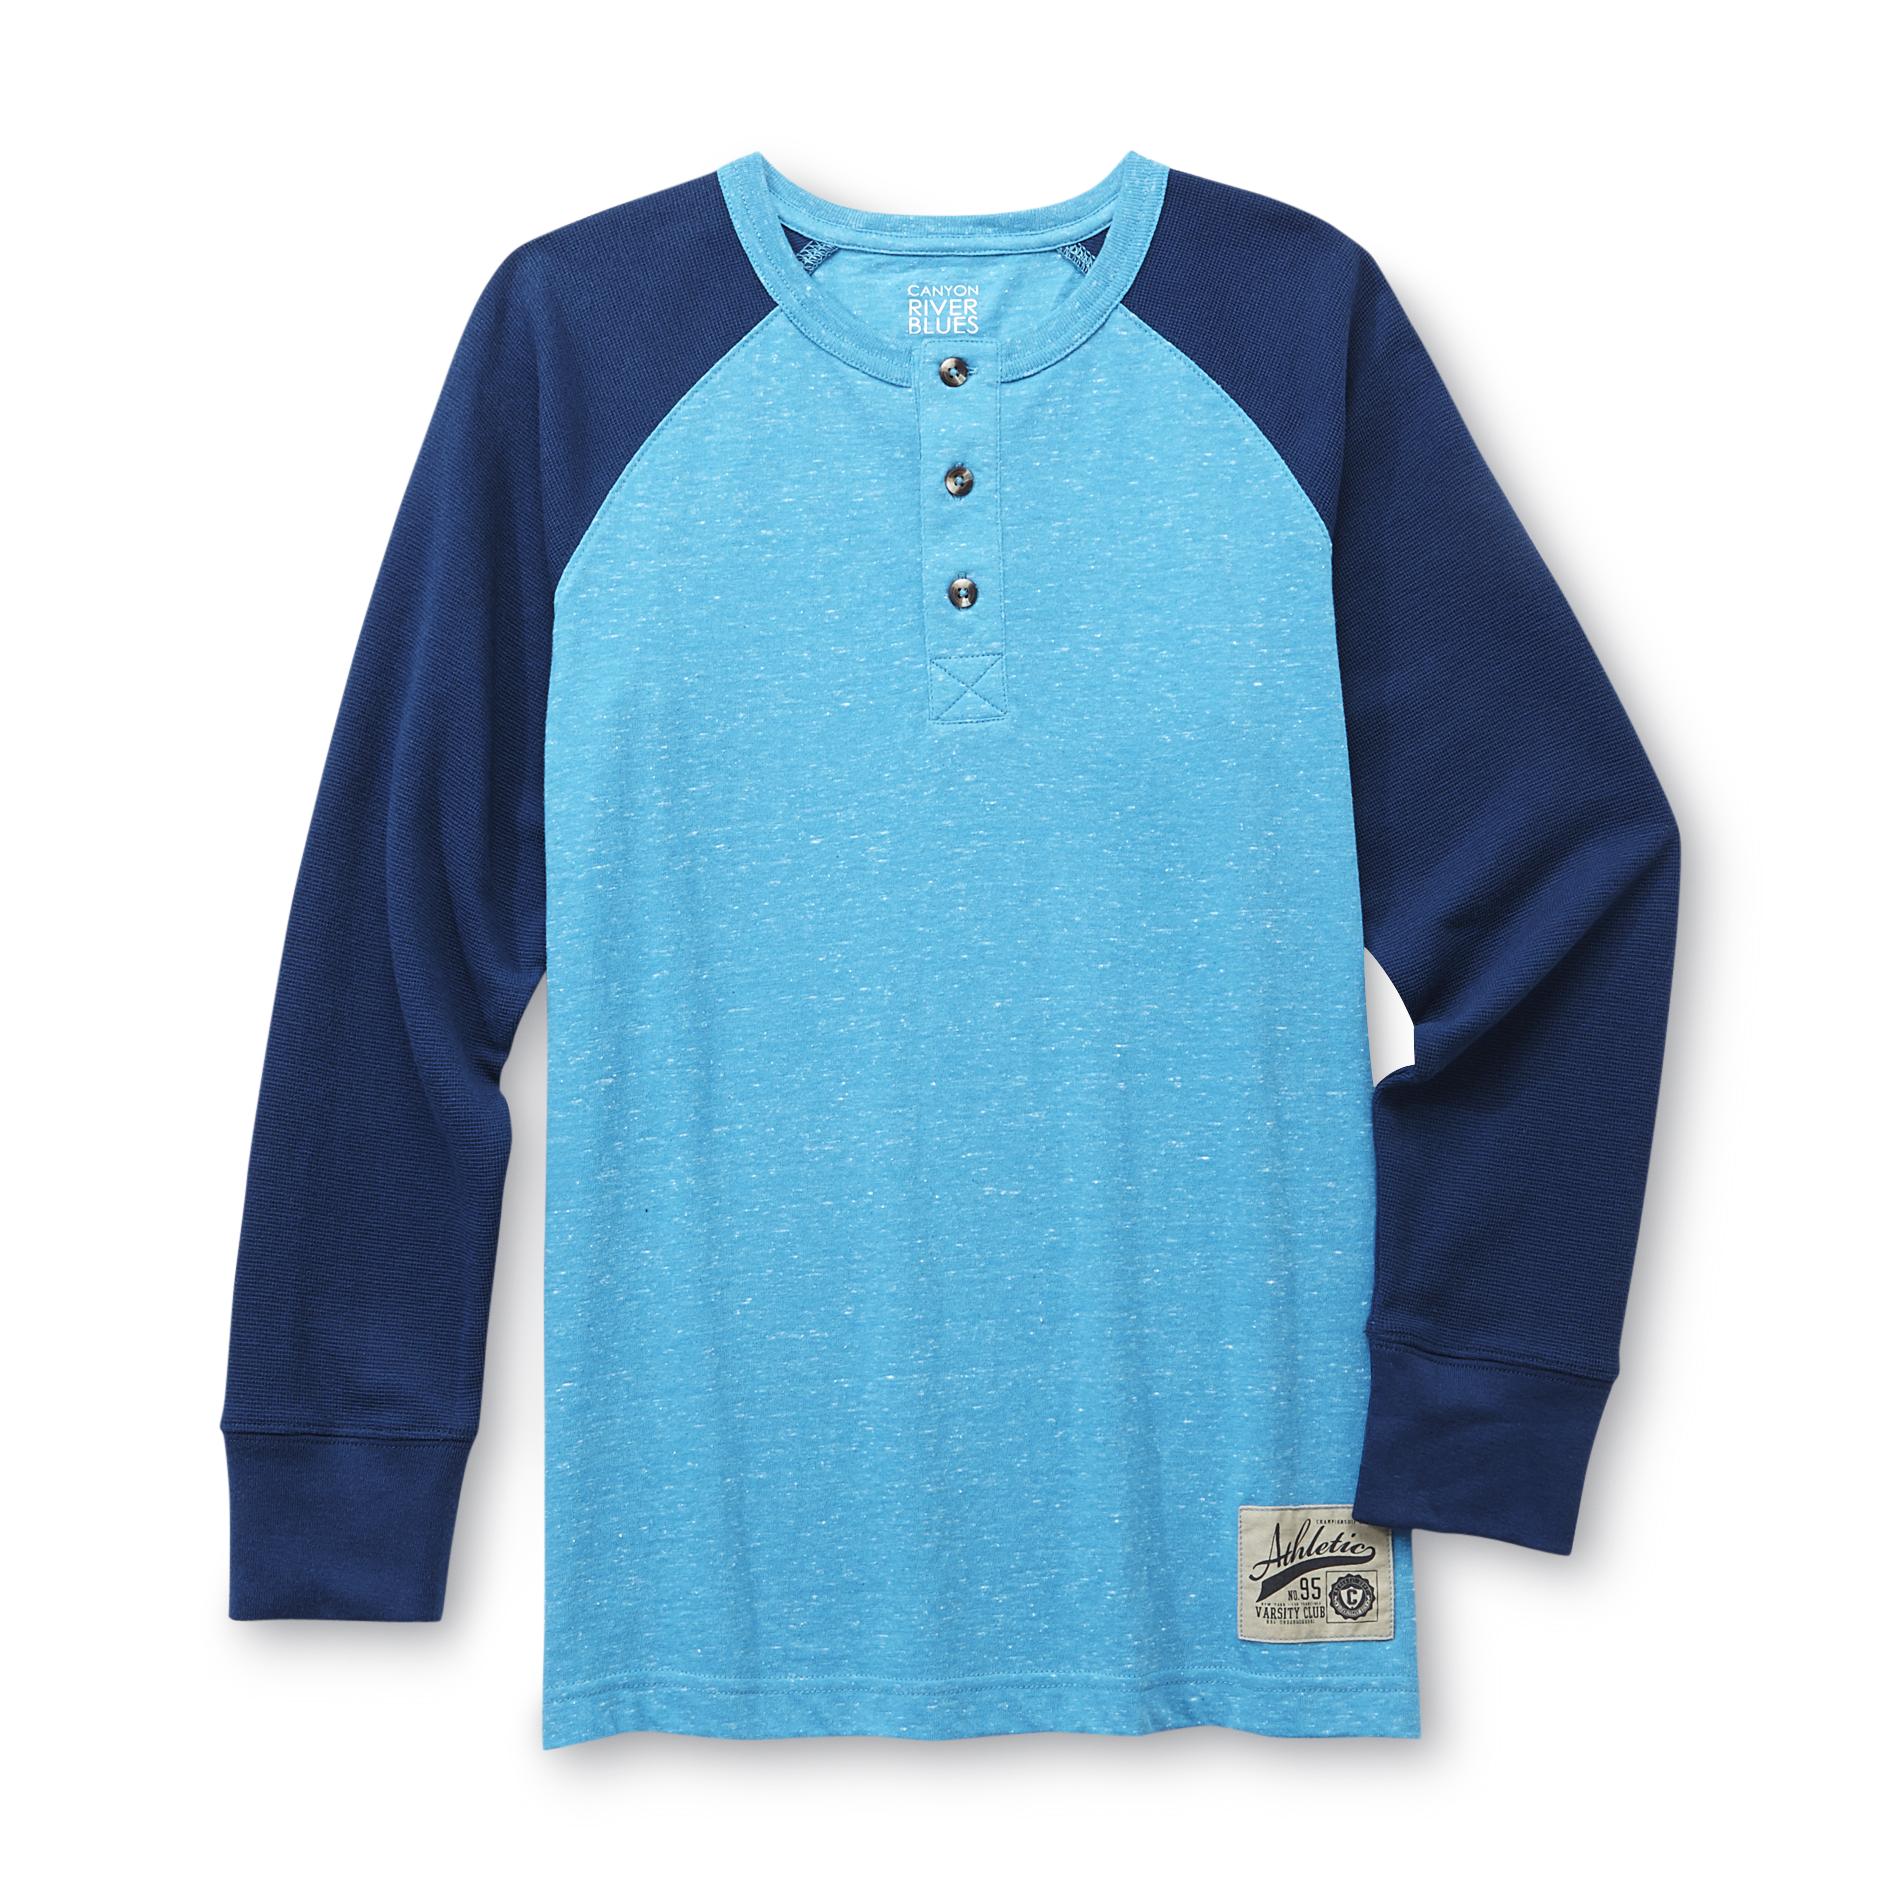 Canyon River Blues Boy's Two-Tone Henley Shirt